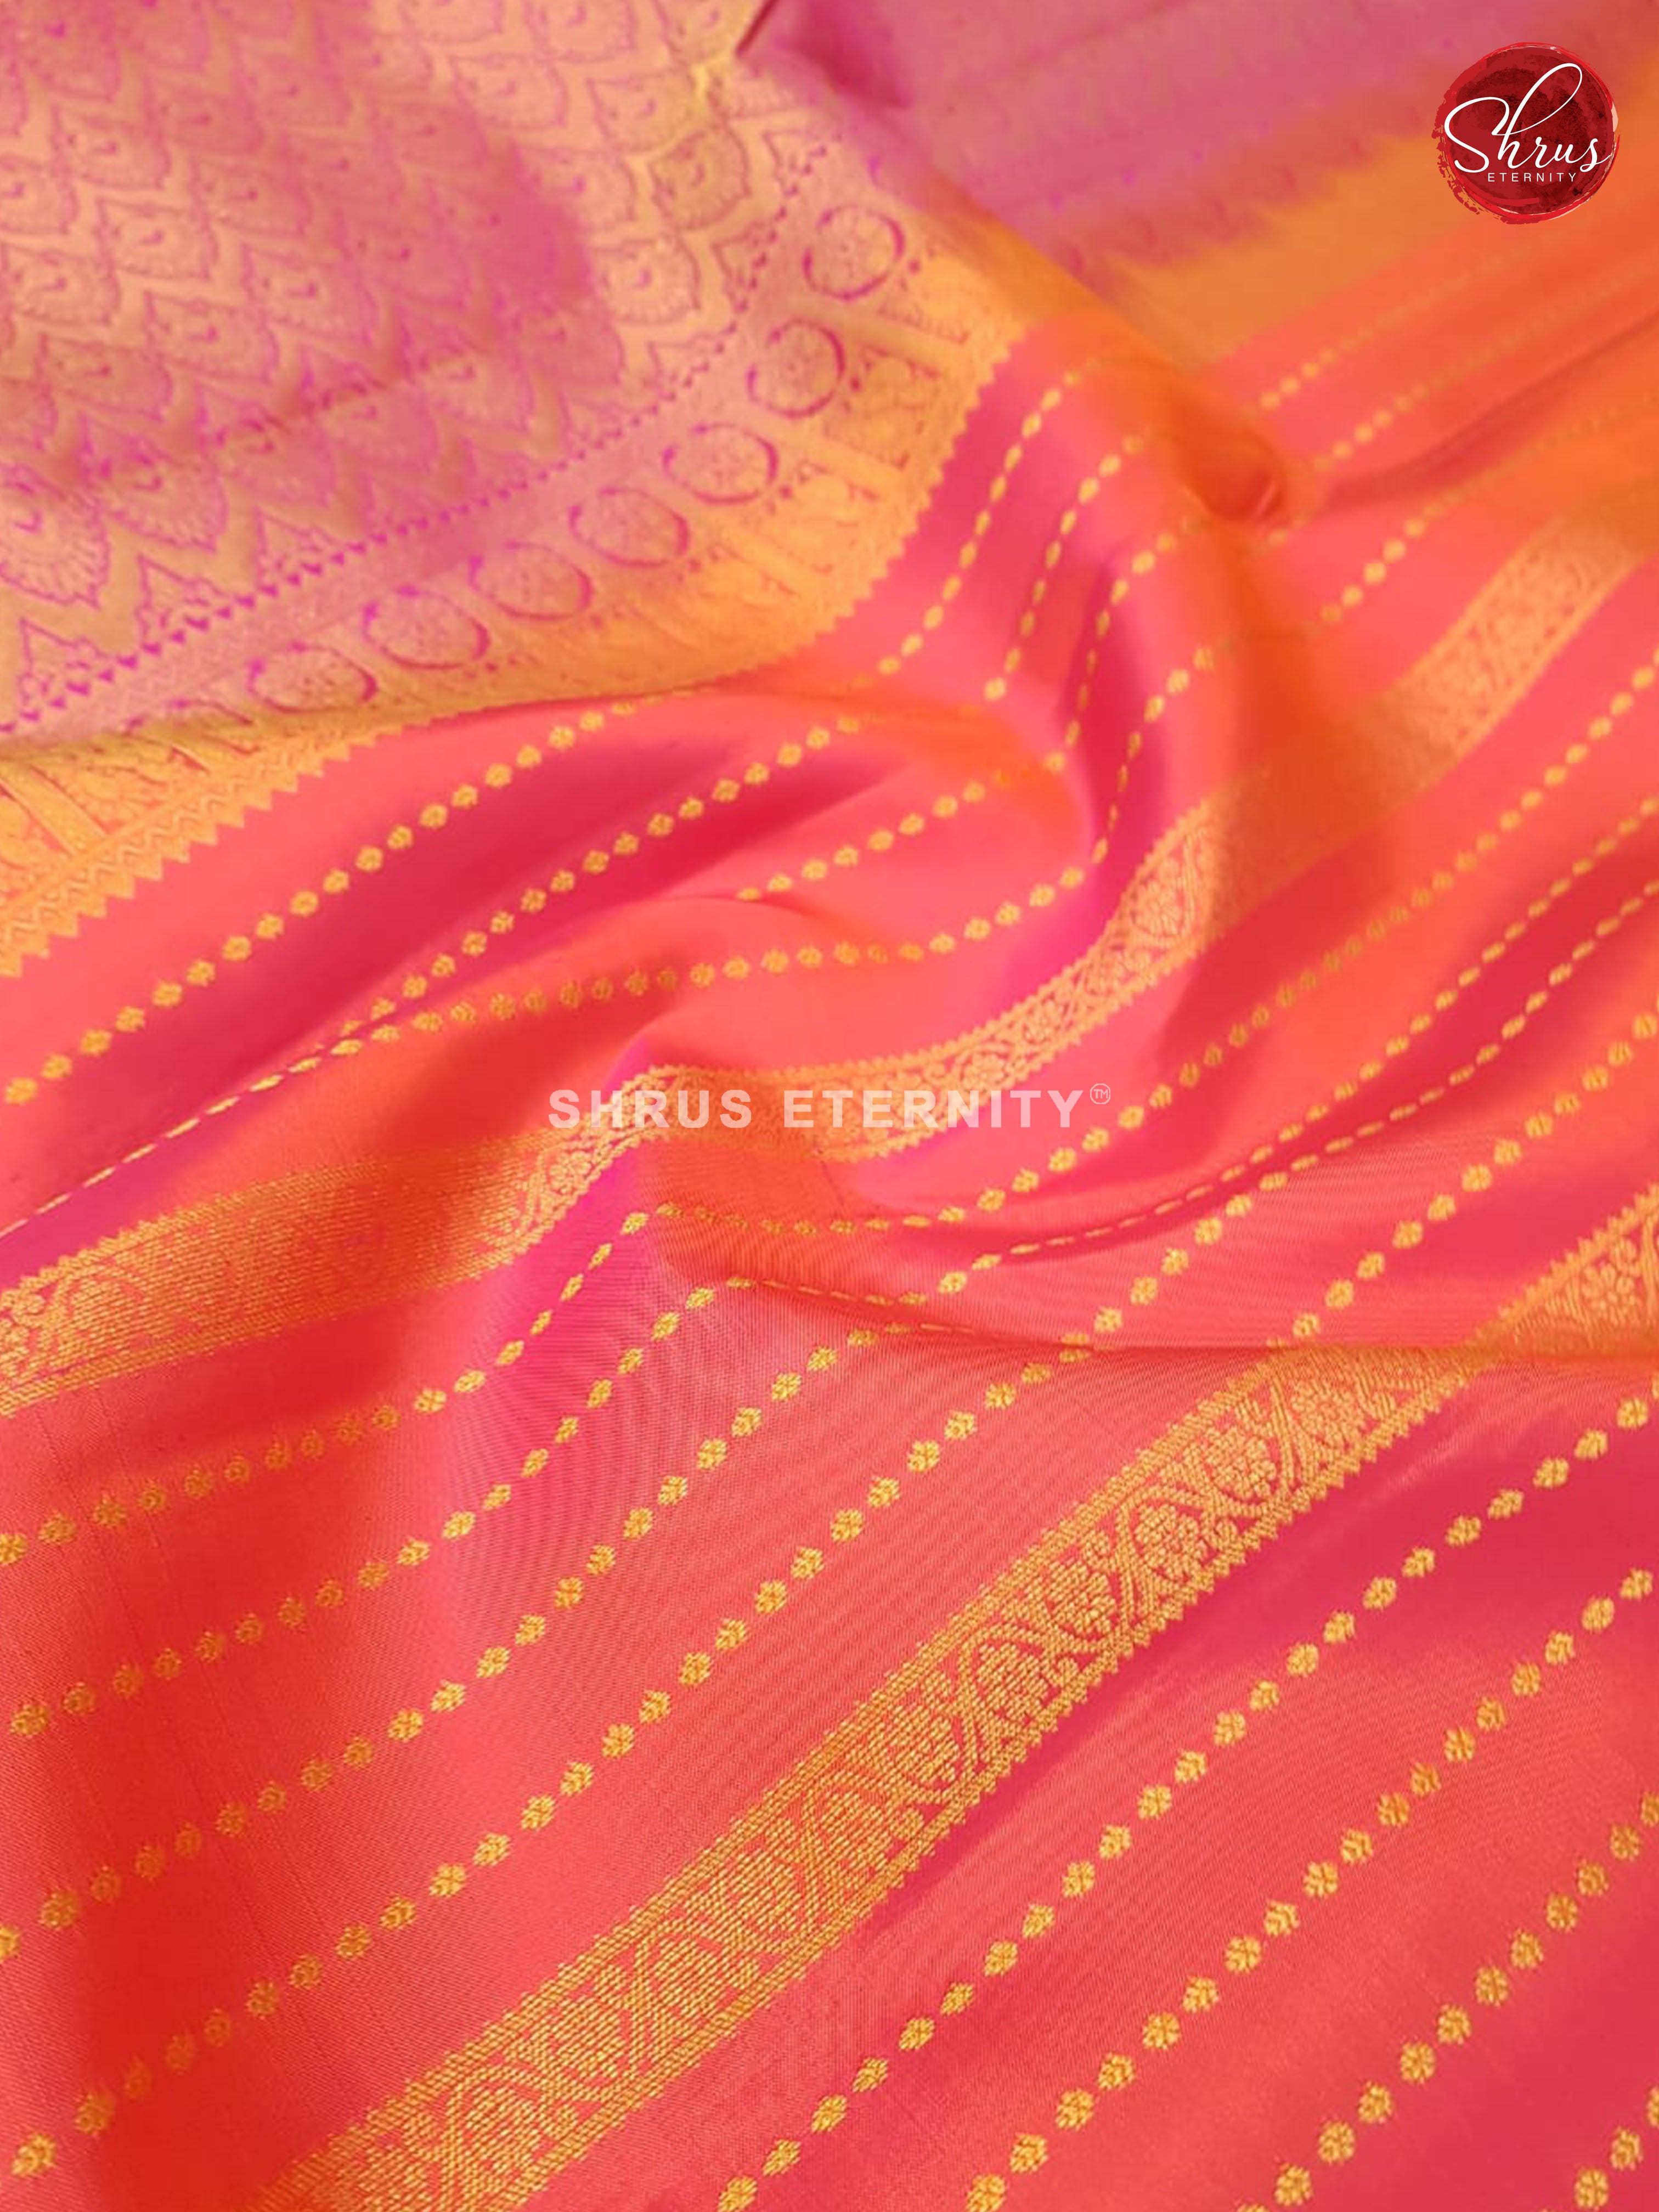 Orangish Pink & Majenta - Kanchipuram Silk - Shop on ShrusEternity.com